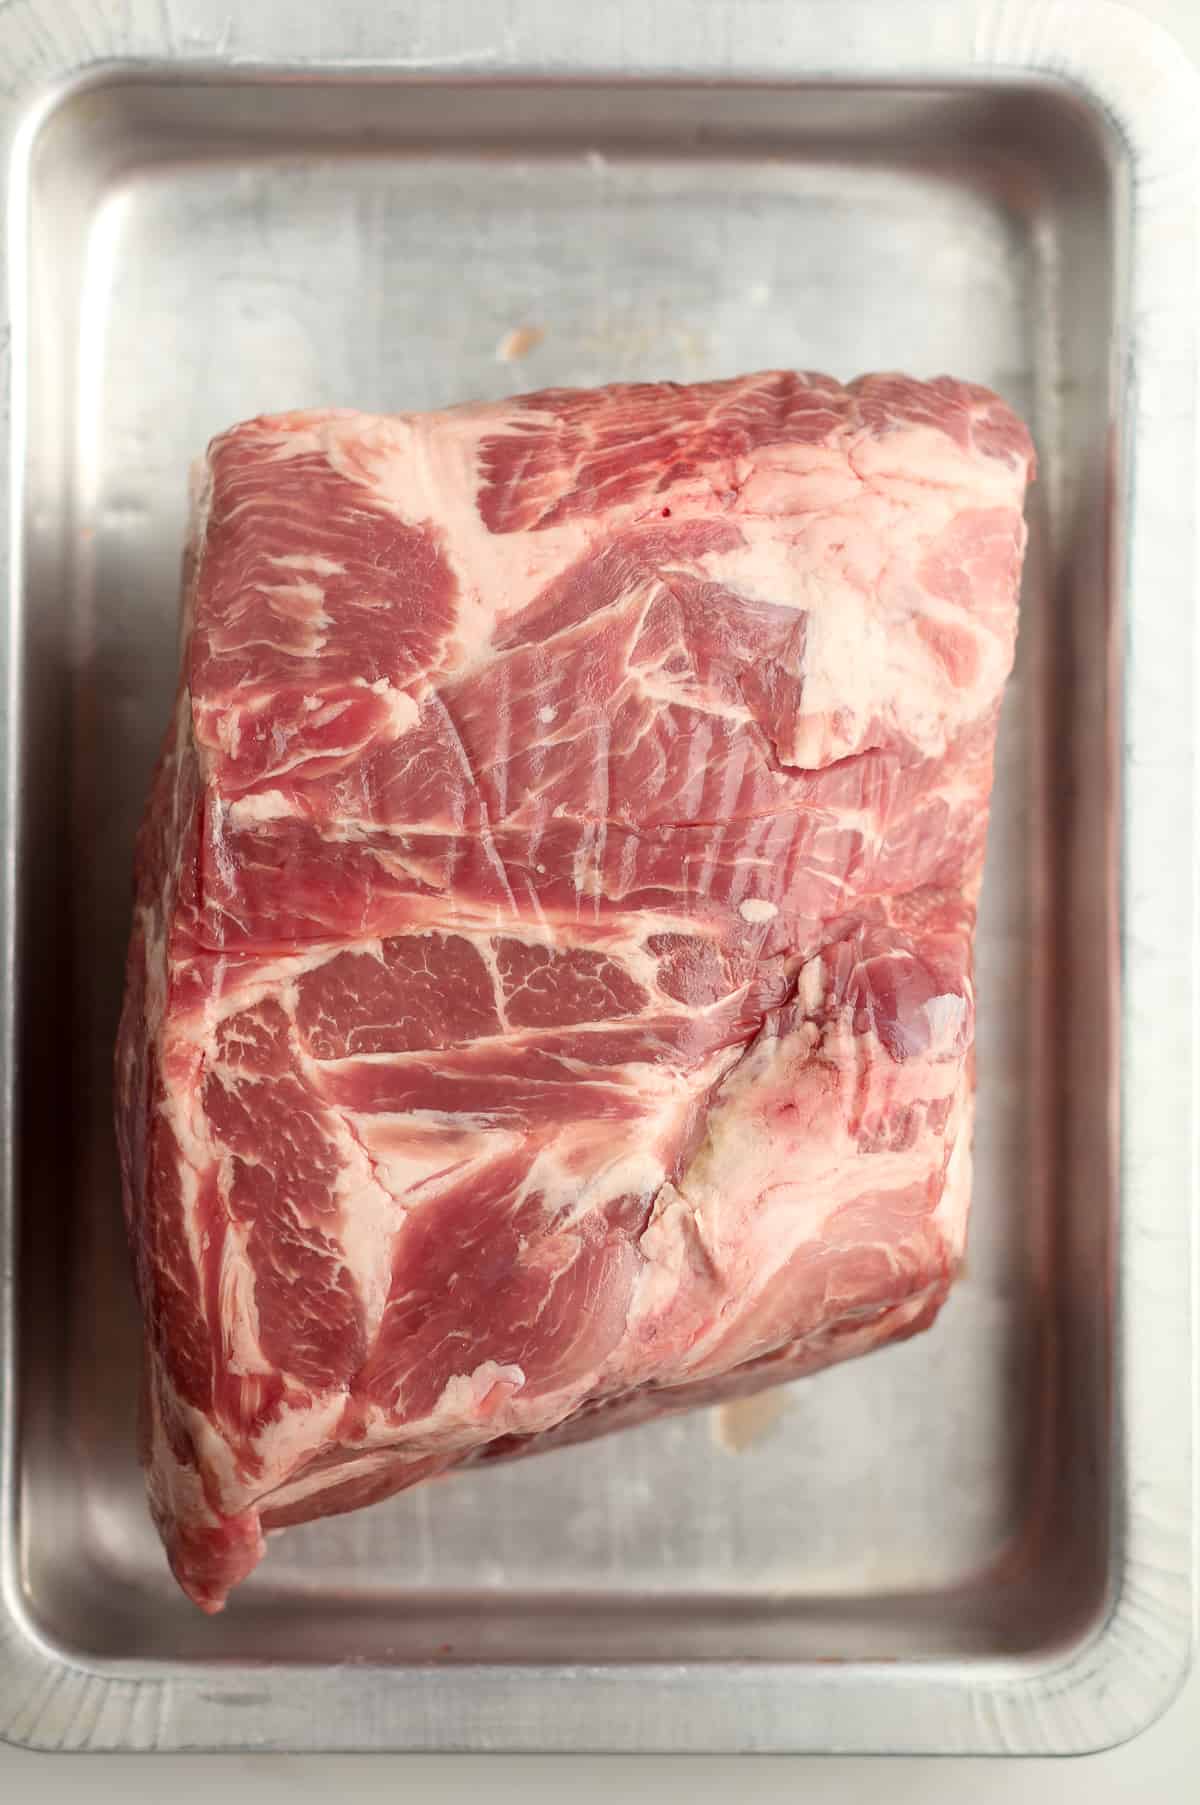 A raw pork shoulder.